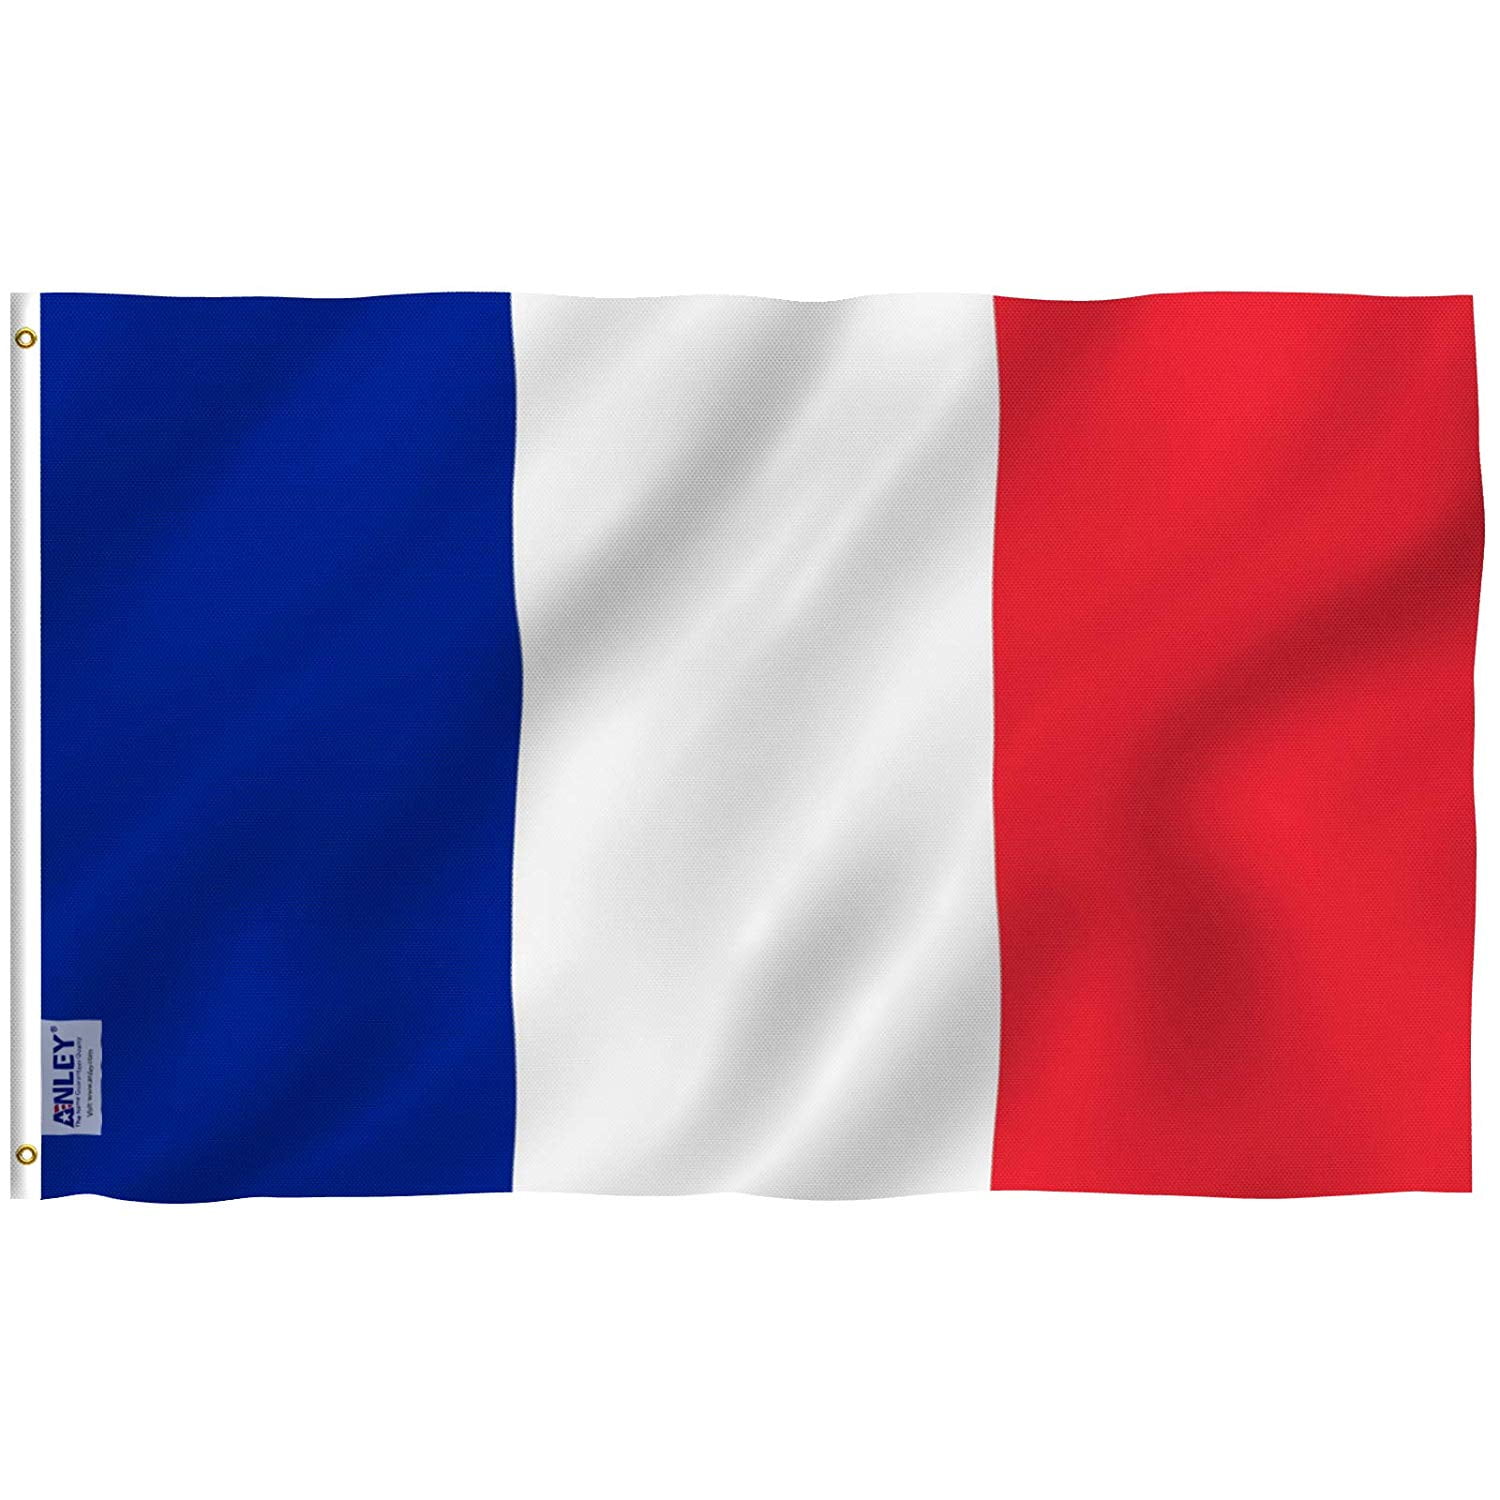 150 x 90 cm flyorigin France Flag 5 feet x 3 feet French National Flags Cup Football fan Banner Sport Flag